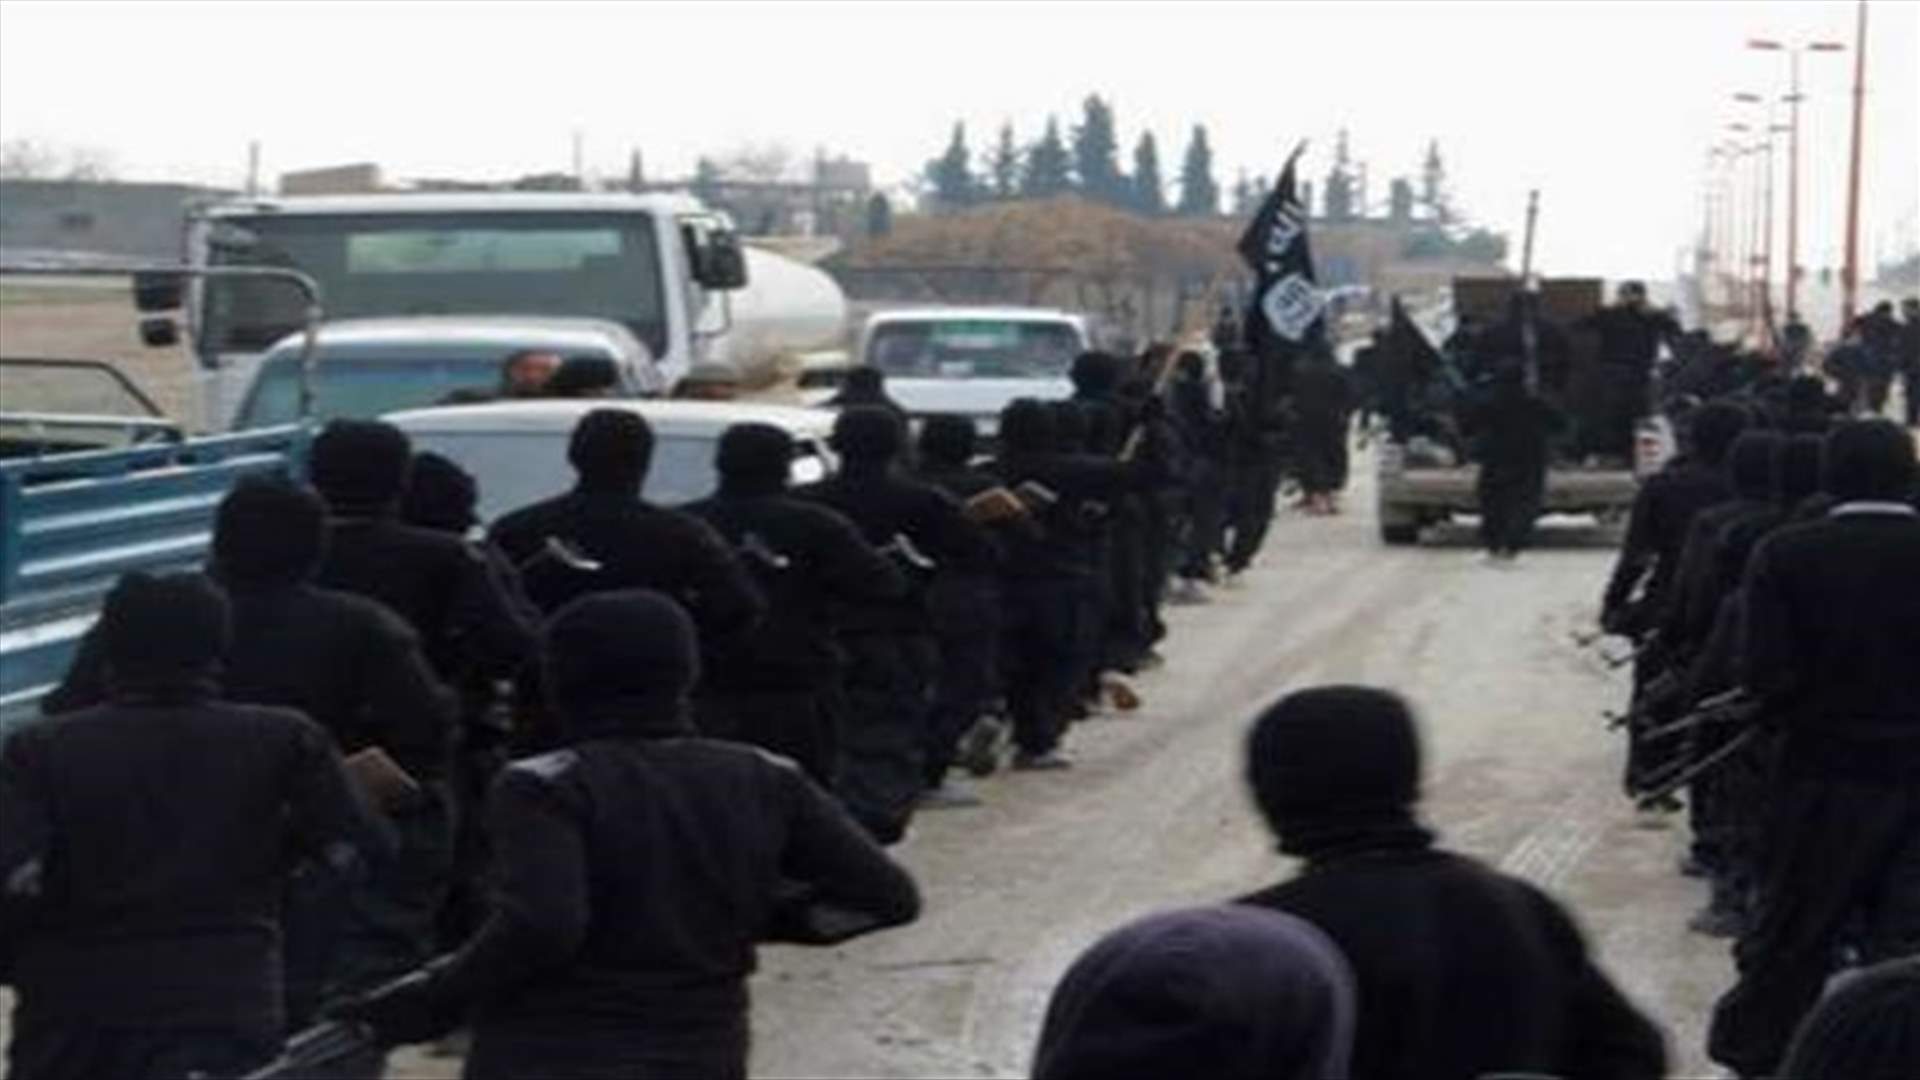 Syrian army, allies cut off Islamic State supply route near al-Bab - monitor